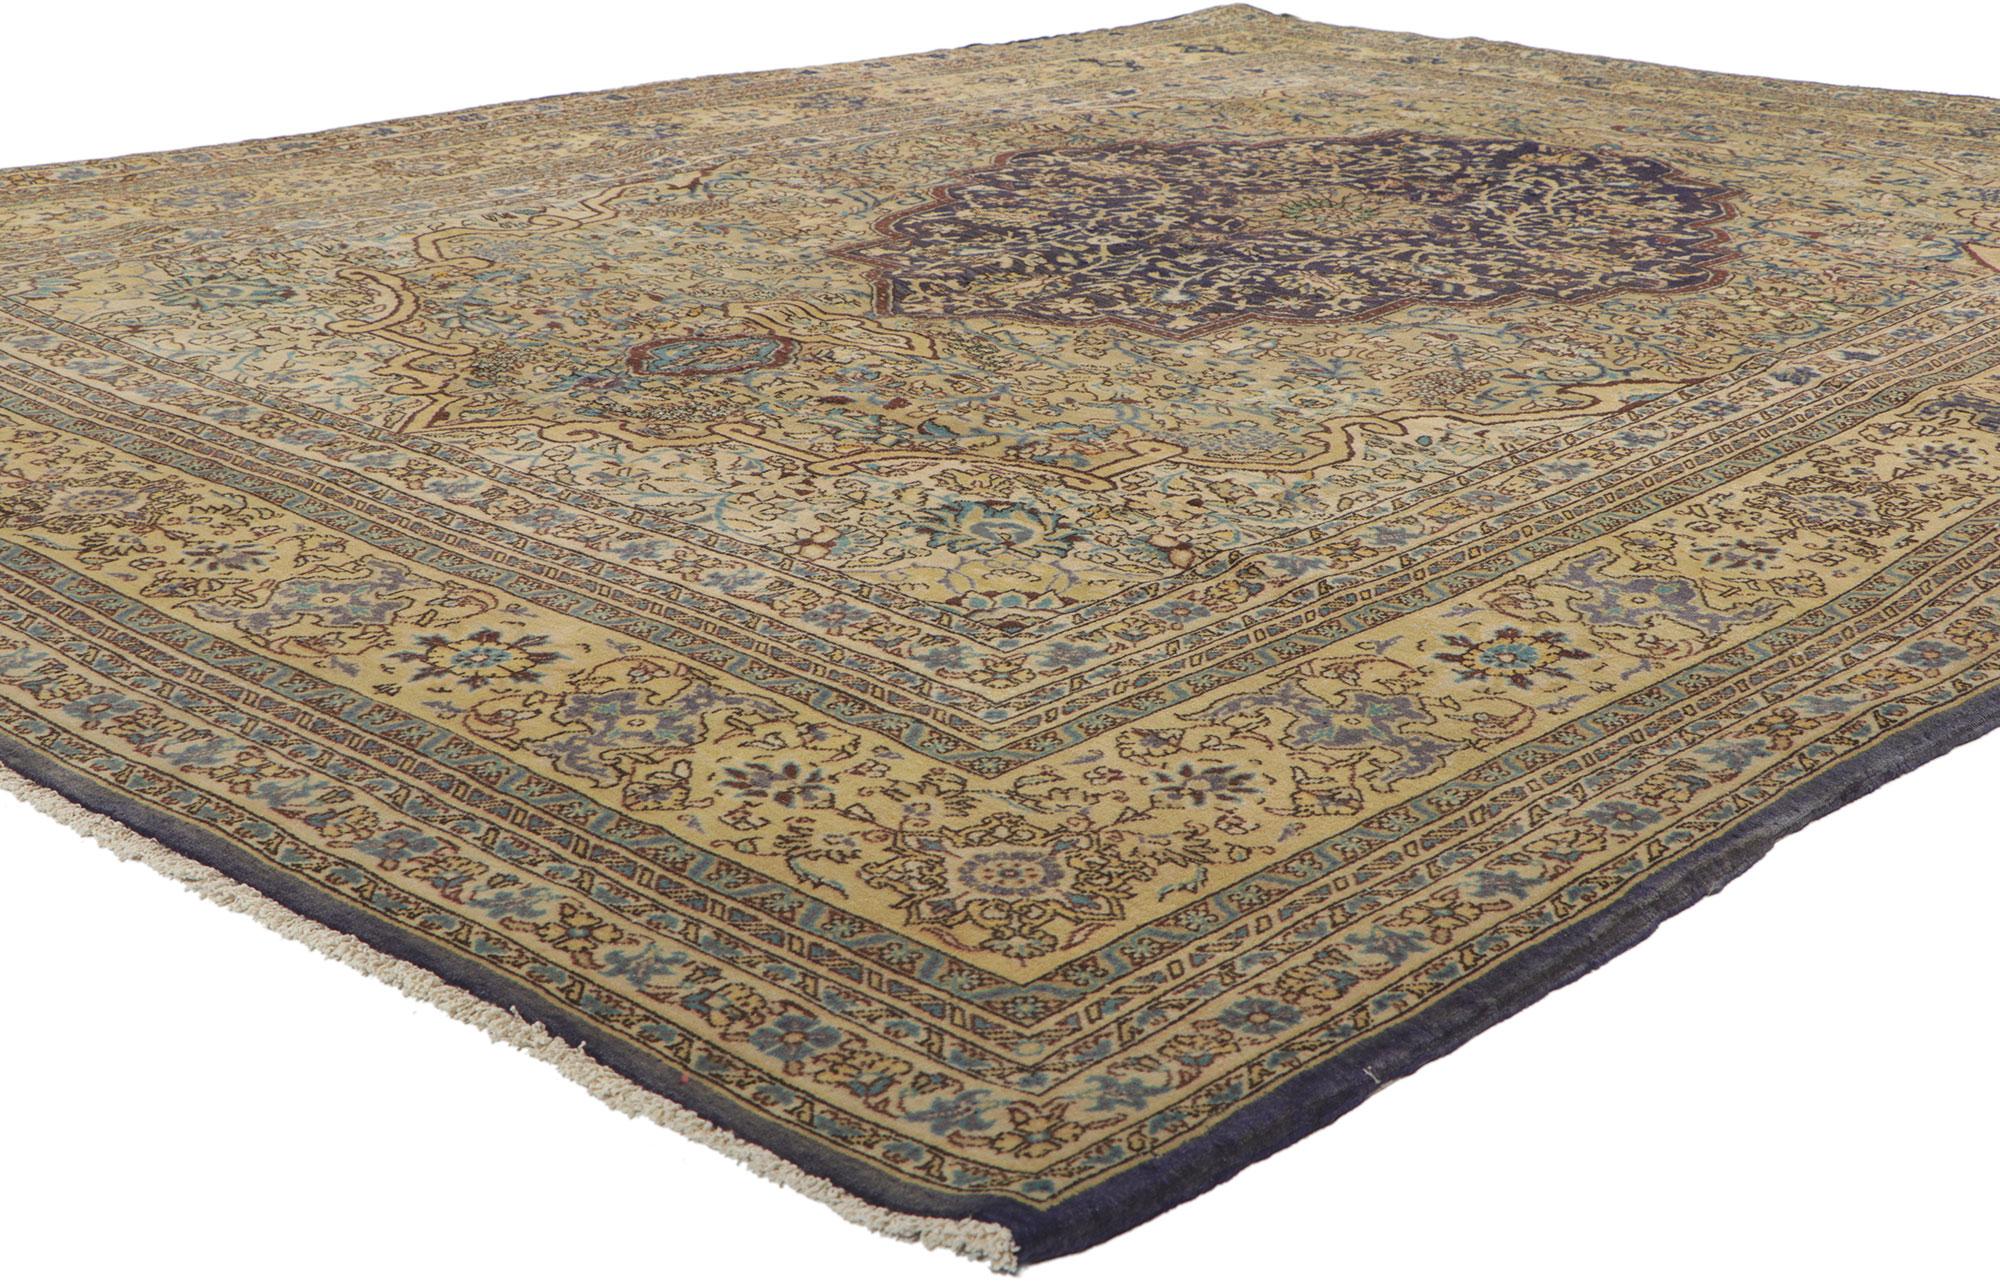 61164 Vintage Persian Qum rug, 07'03 x 09'06.